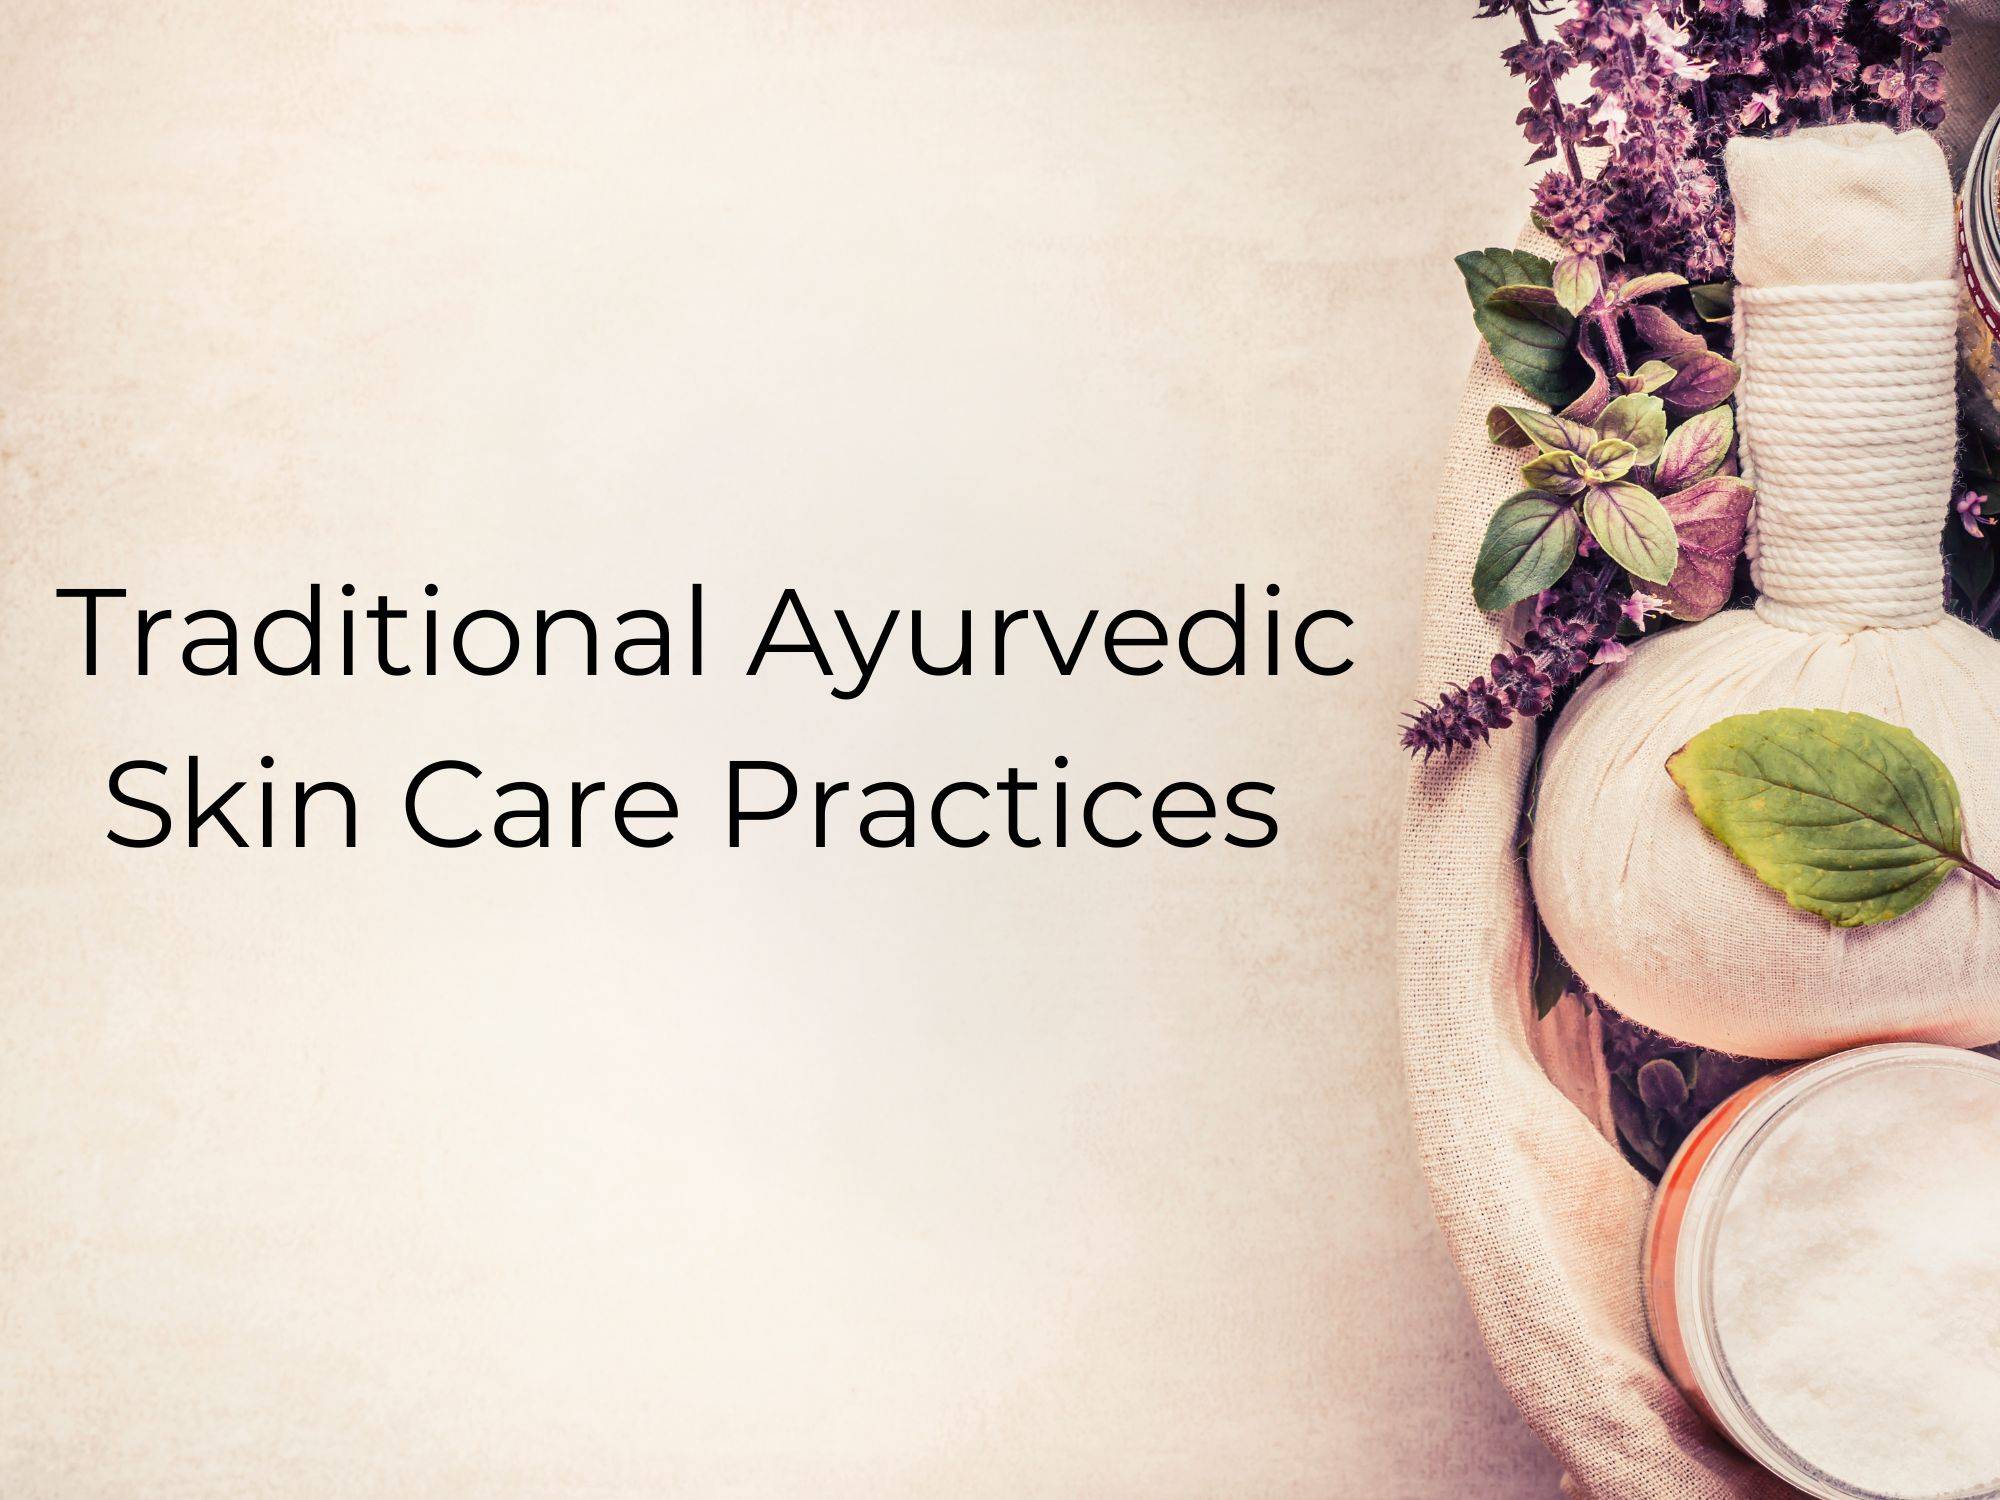 Ayurvedic skin care practices